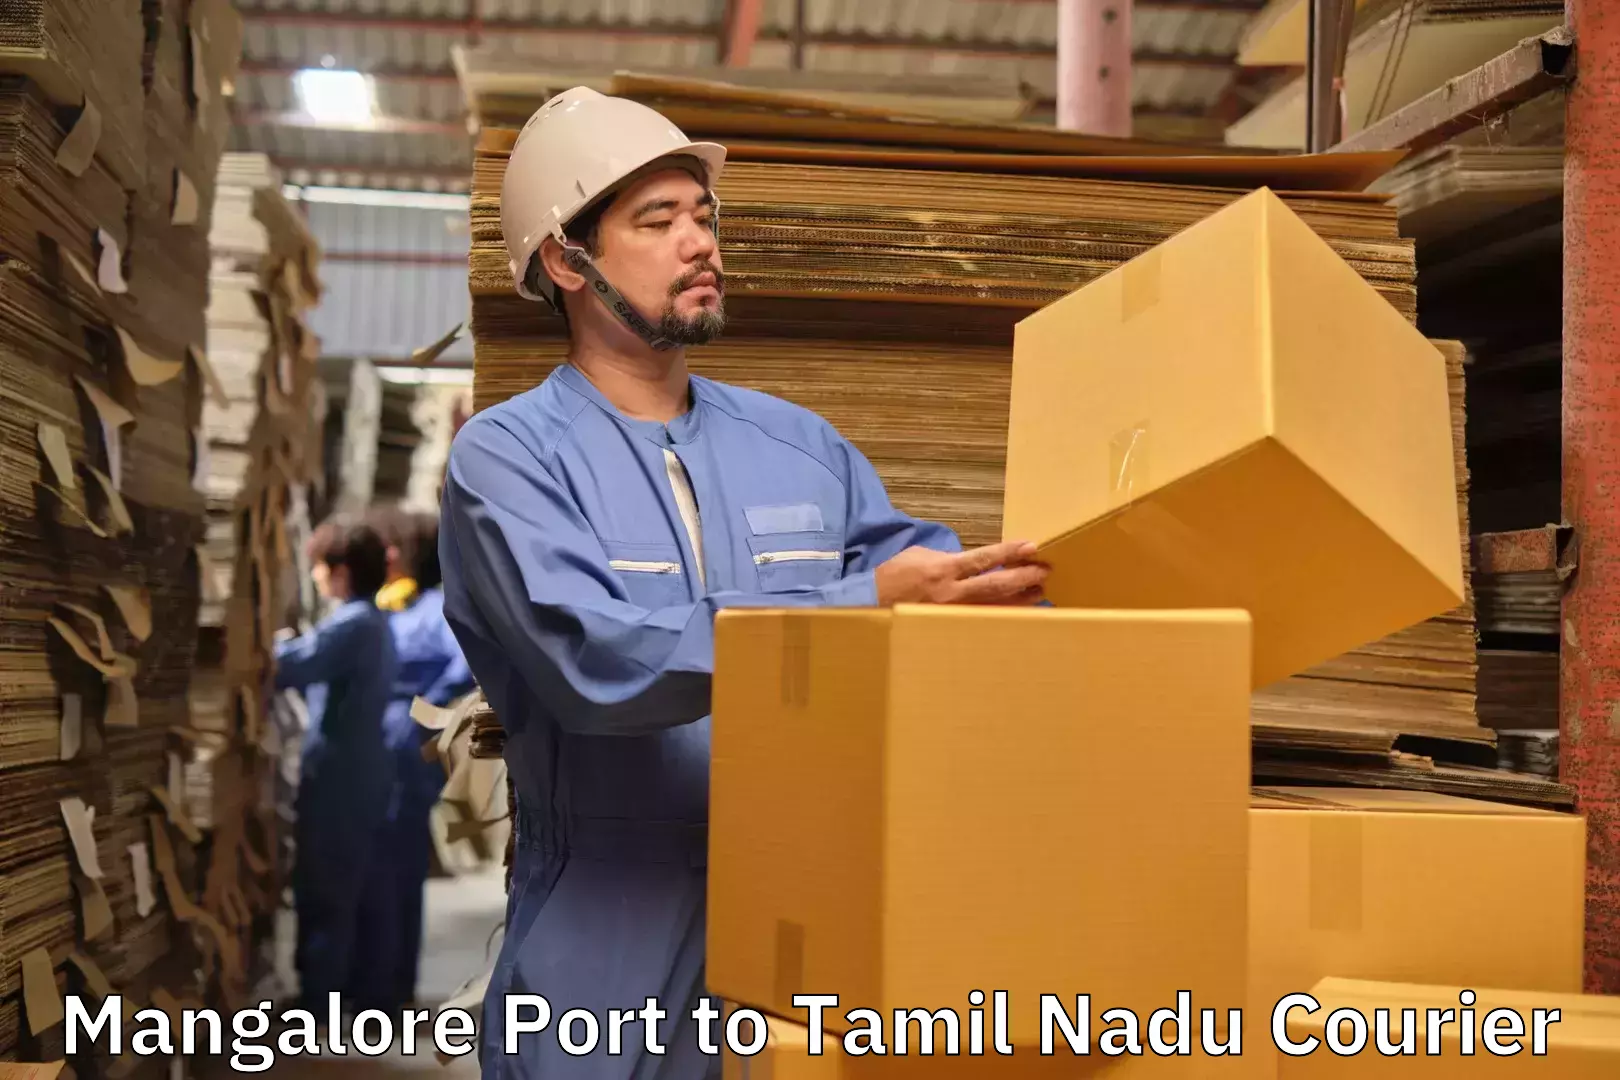 Luggage shipment specialists Mangalore Port to Chengalpattu